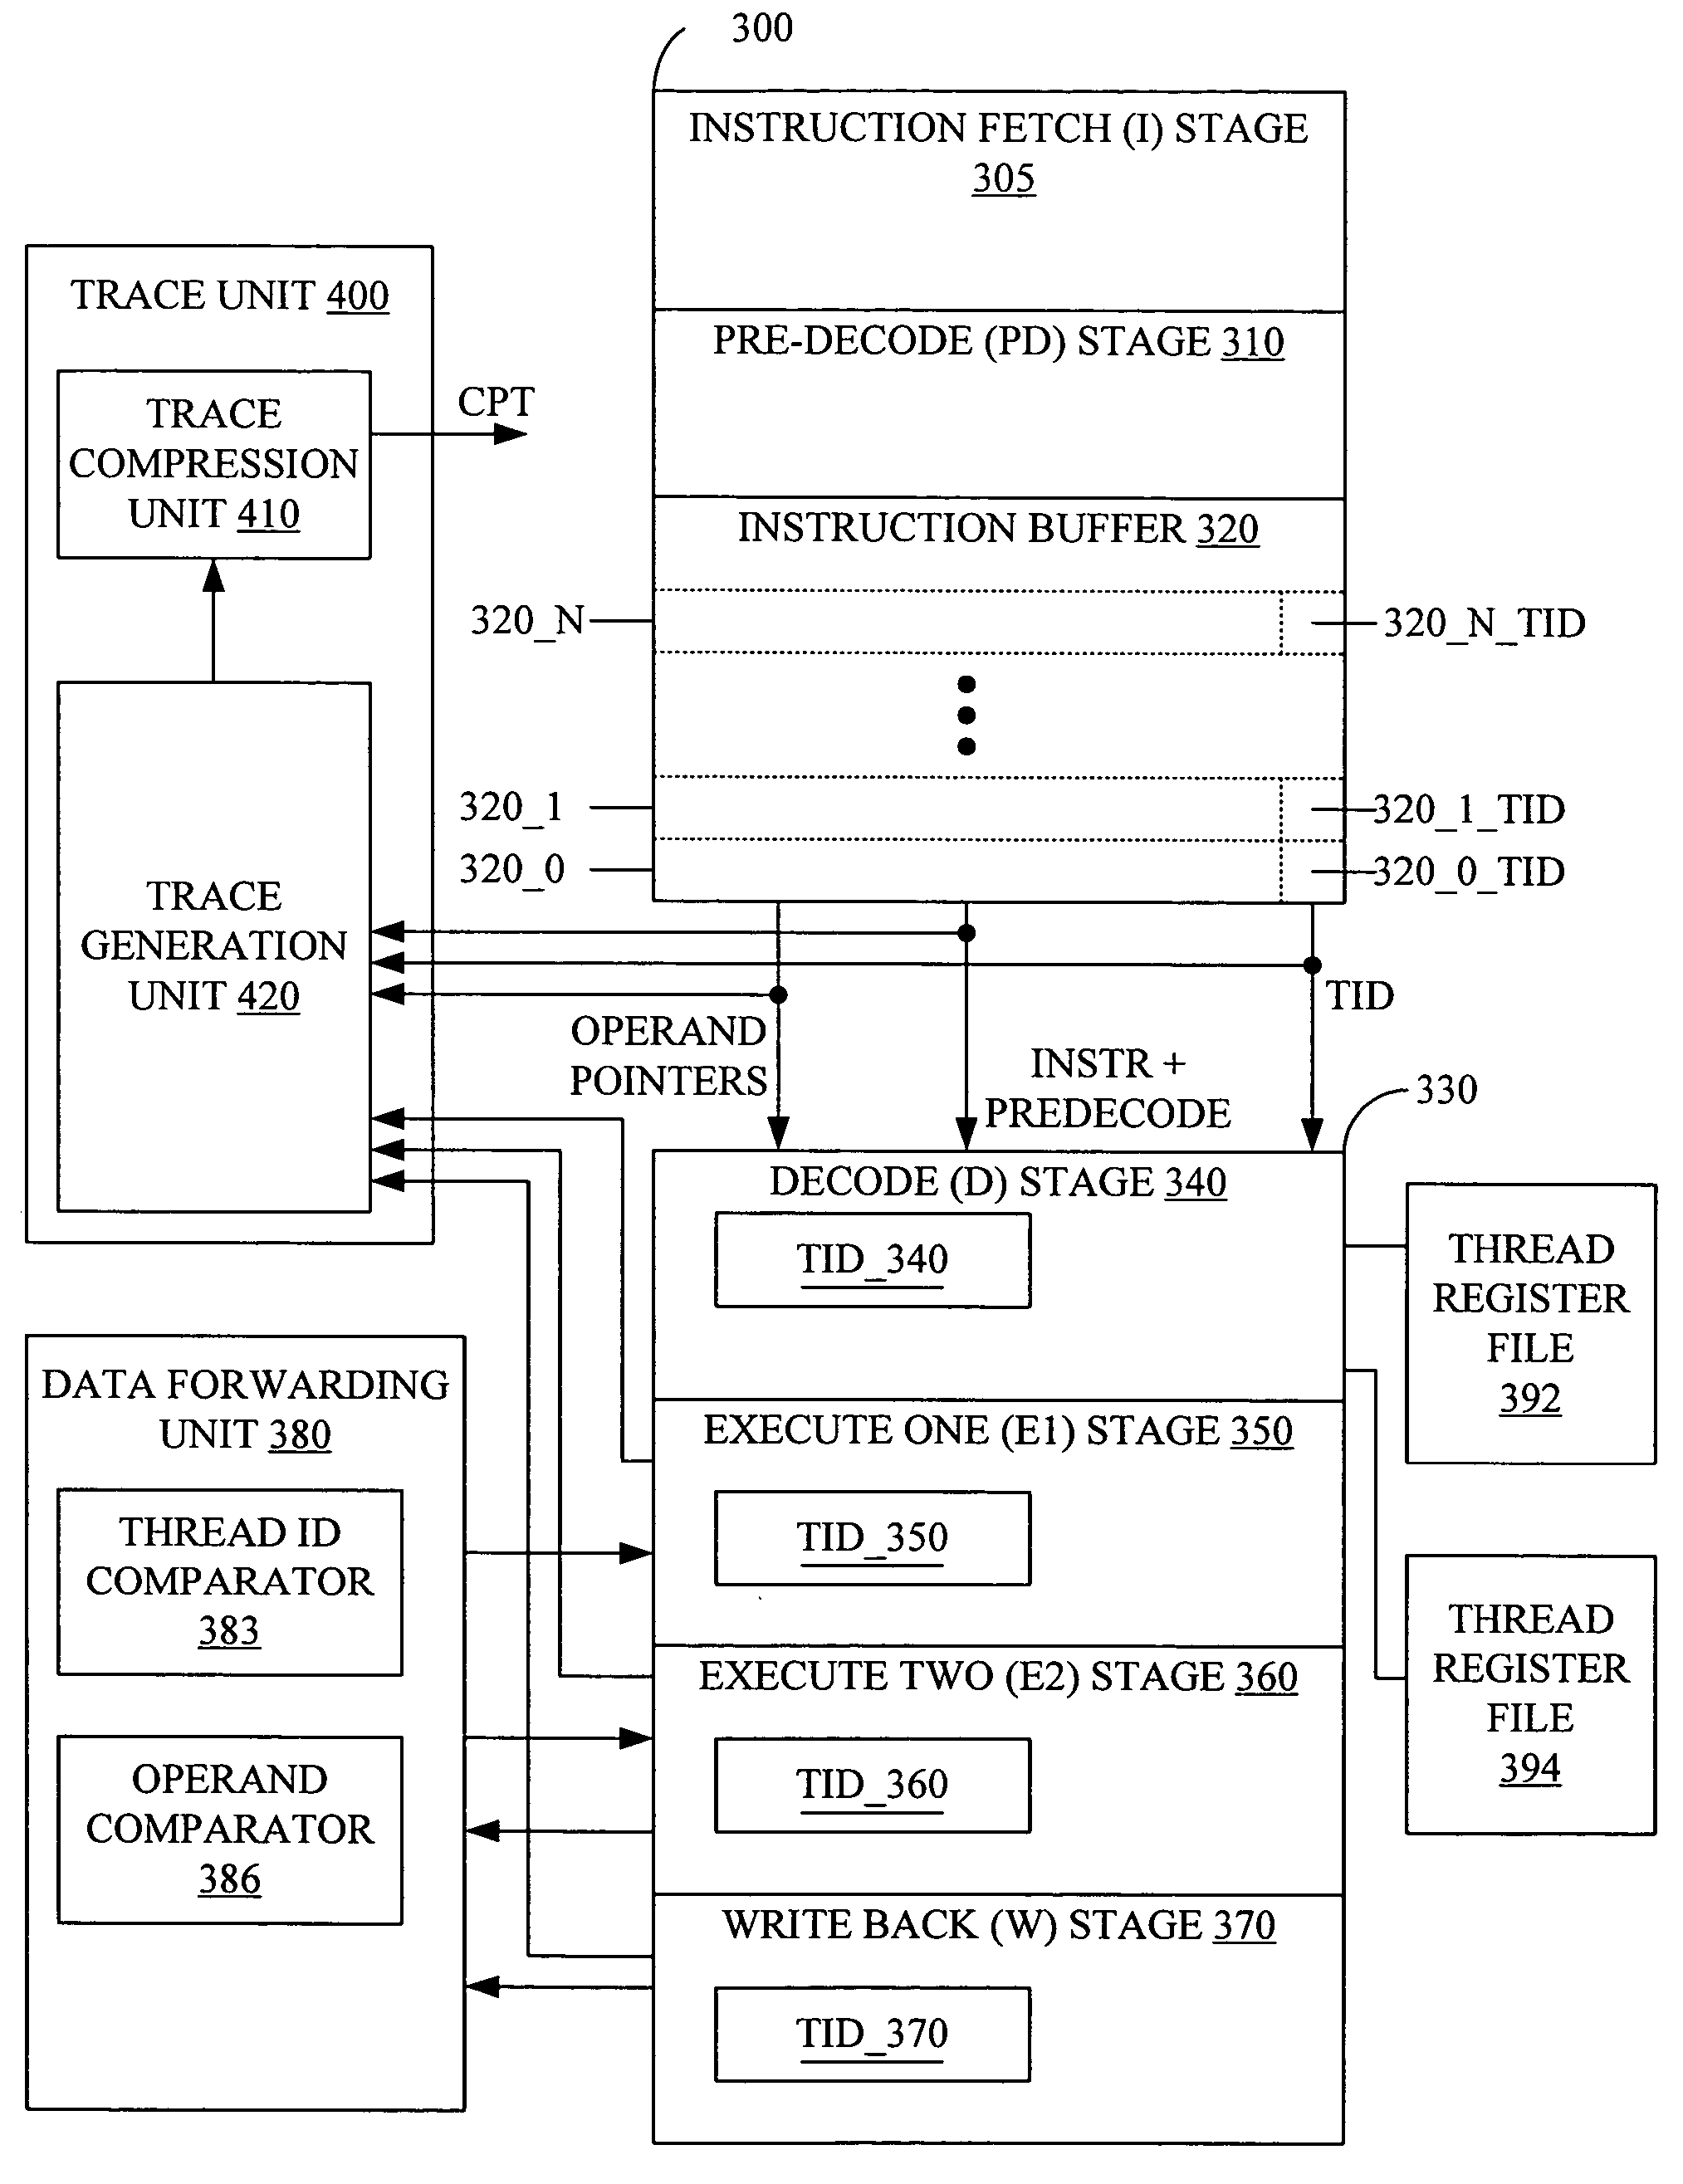 Program tracing in a multithreaded processor